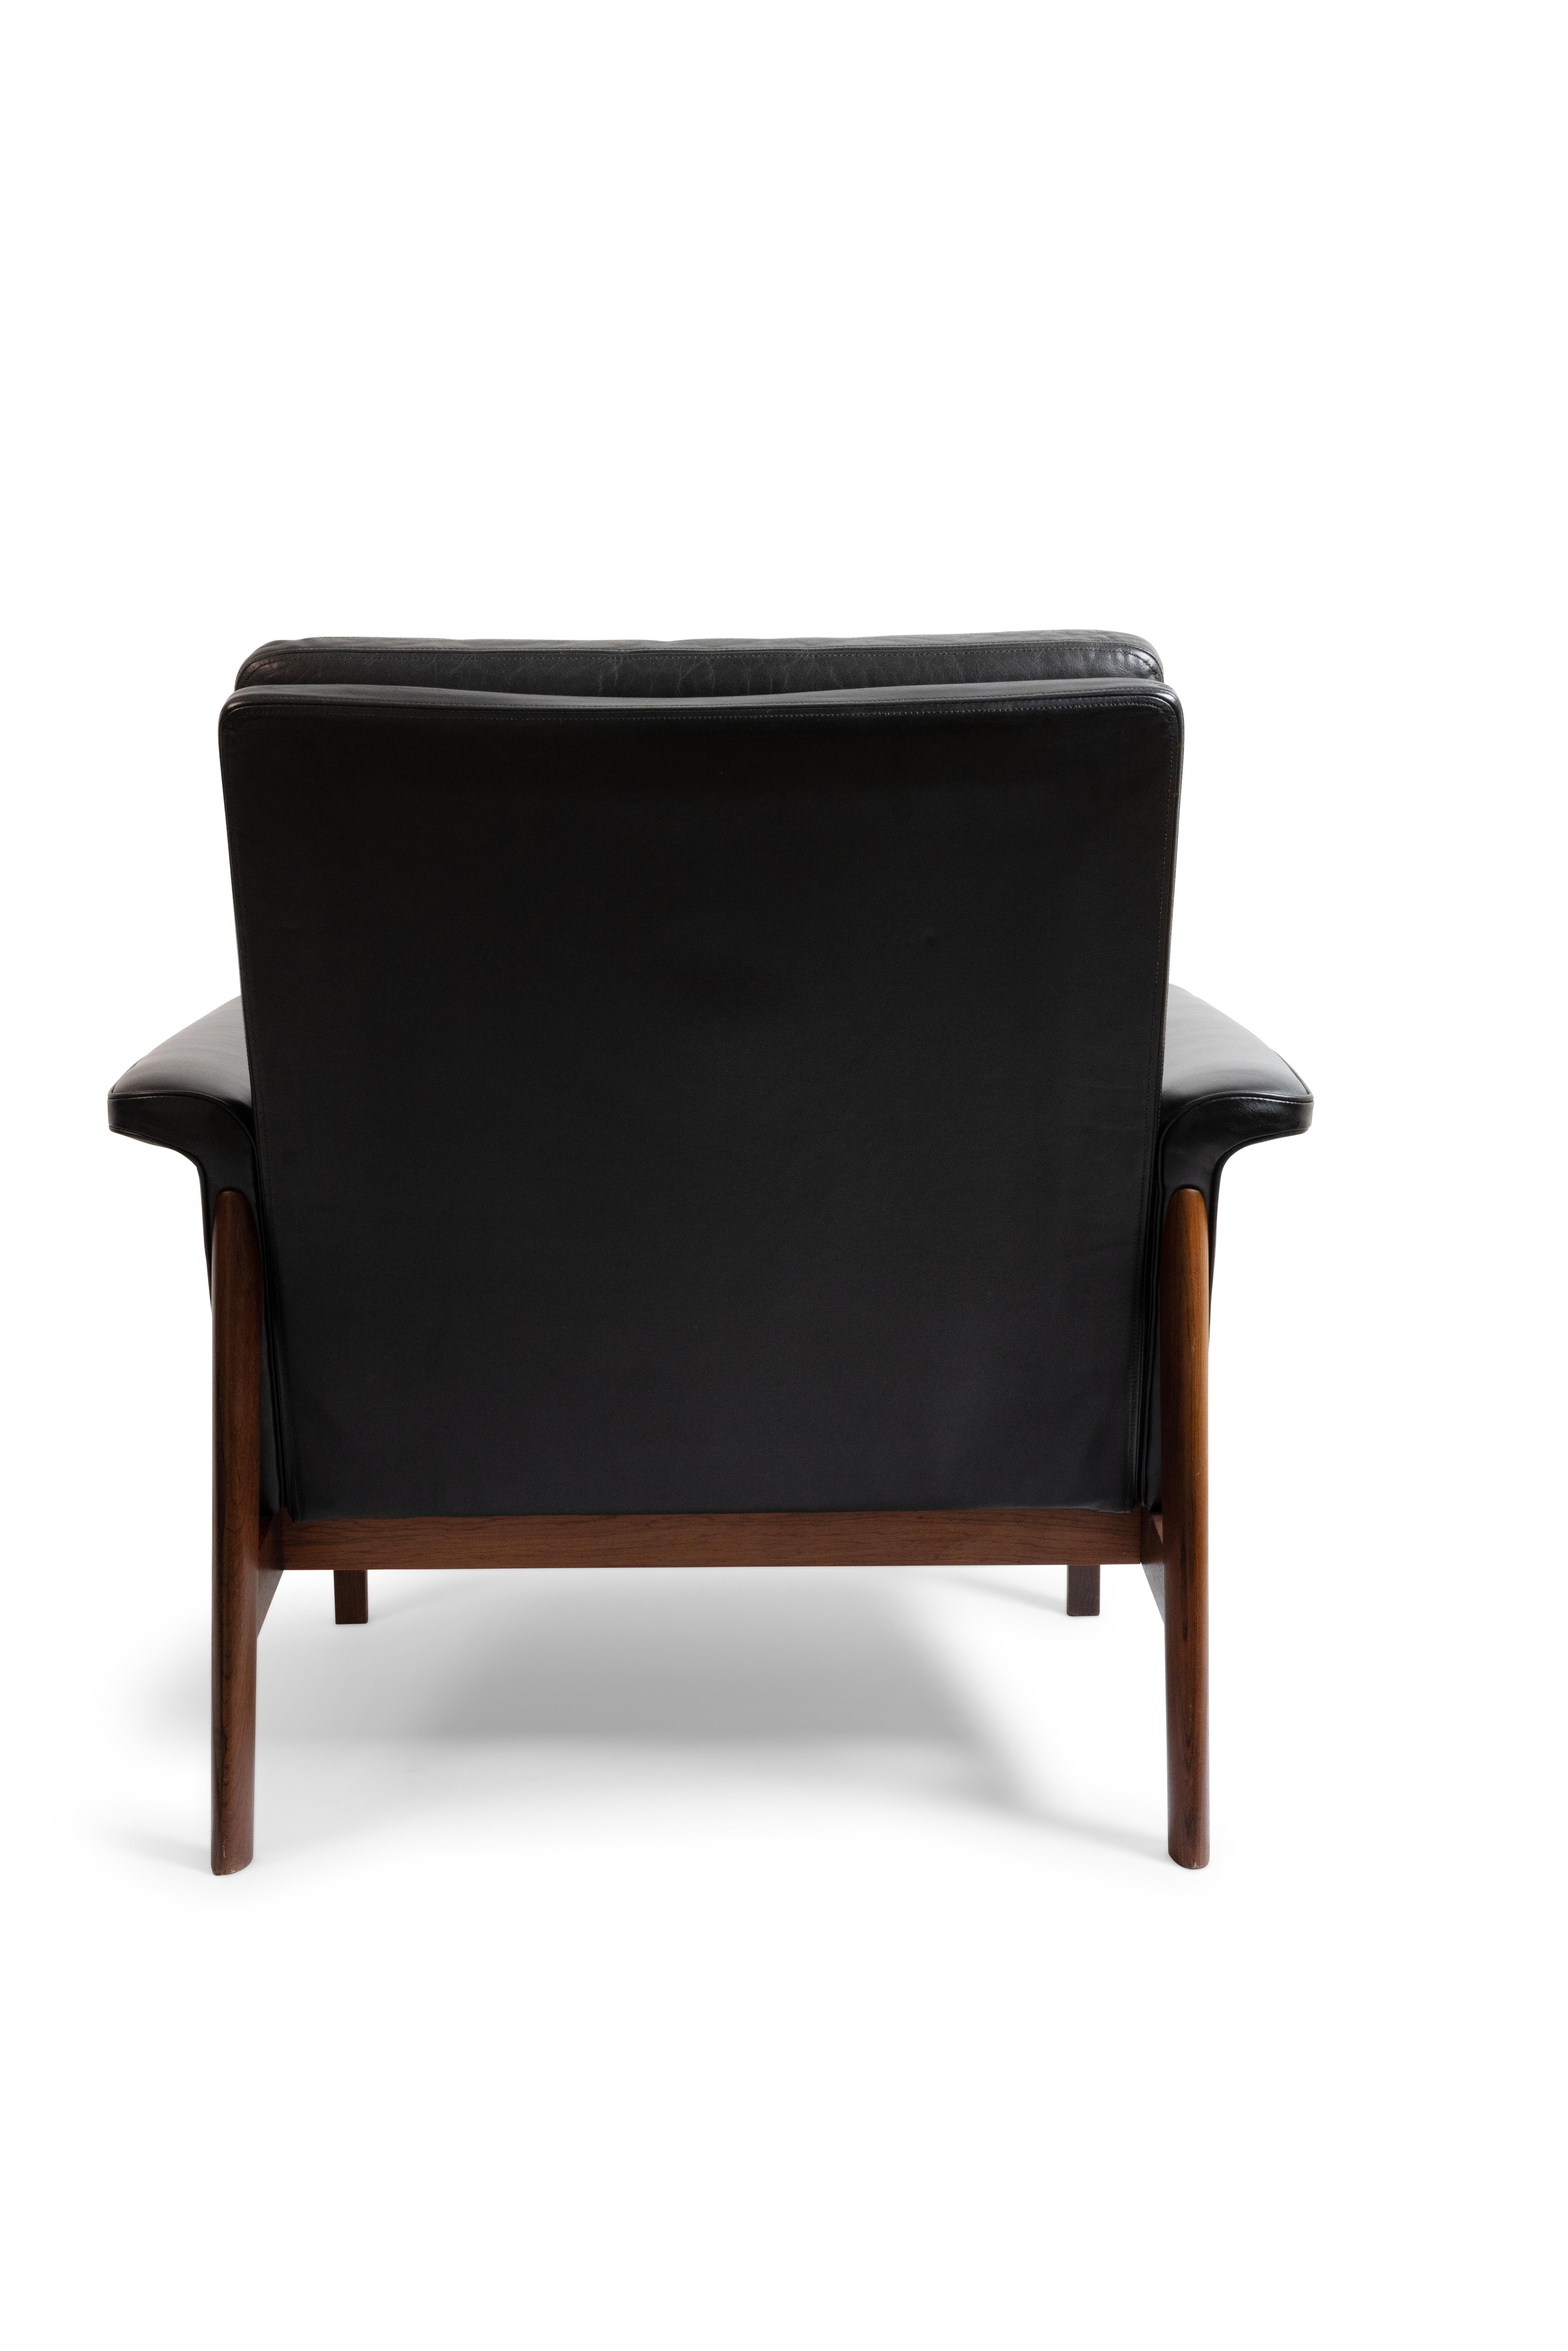 Finn Juhl Three Seat Sofa with Original Black Leather, Model 218/3, Denmark For Sale 6